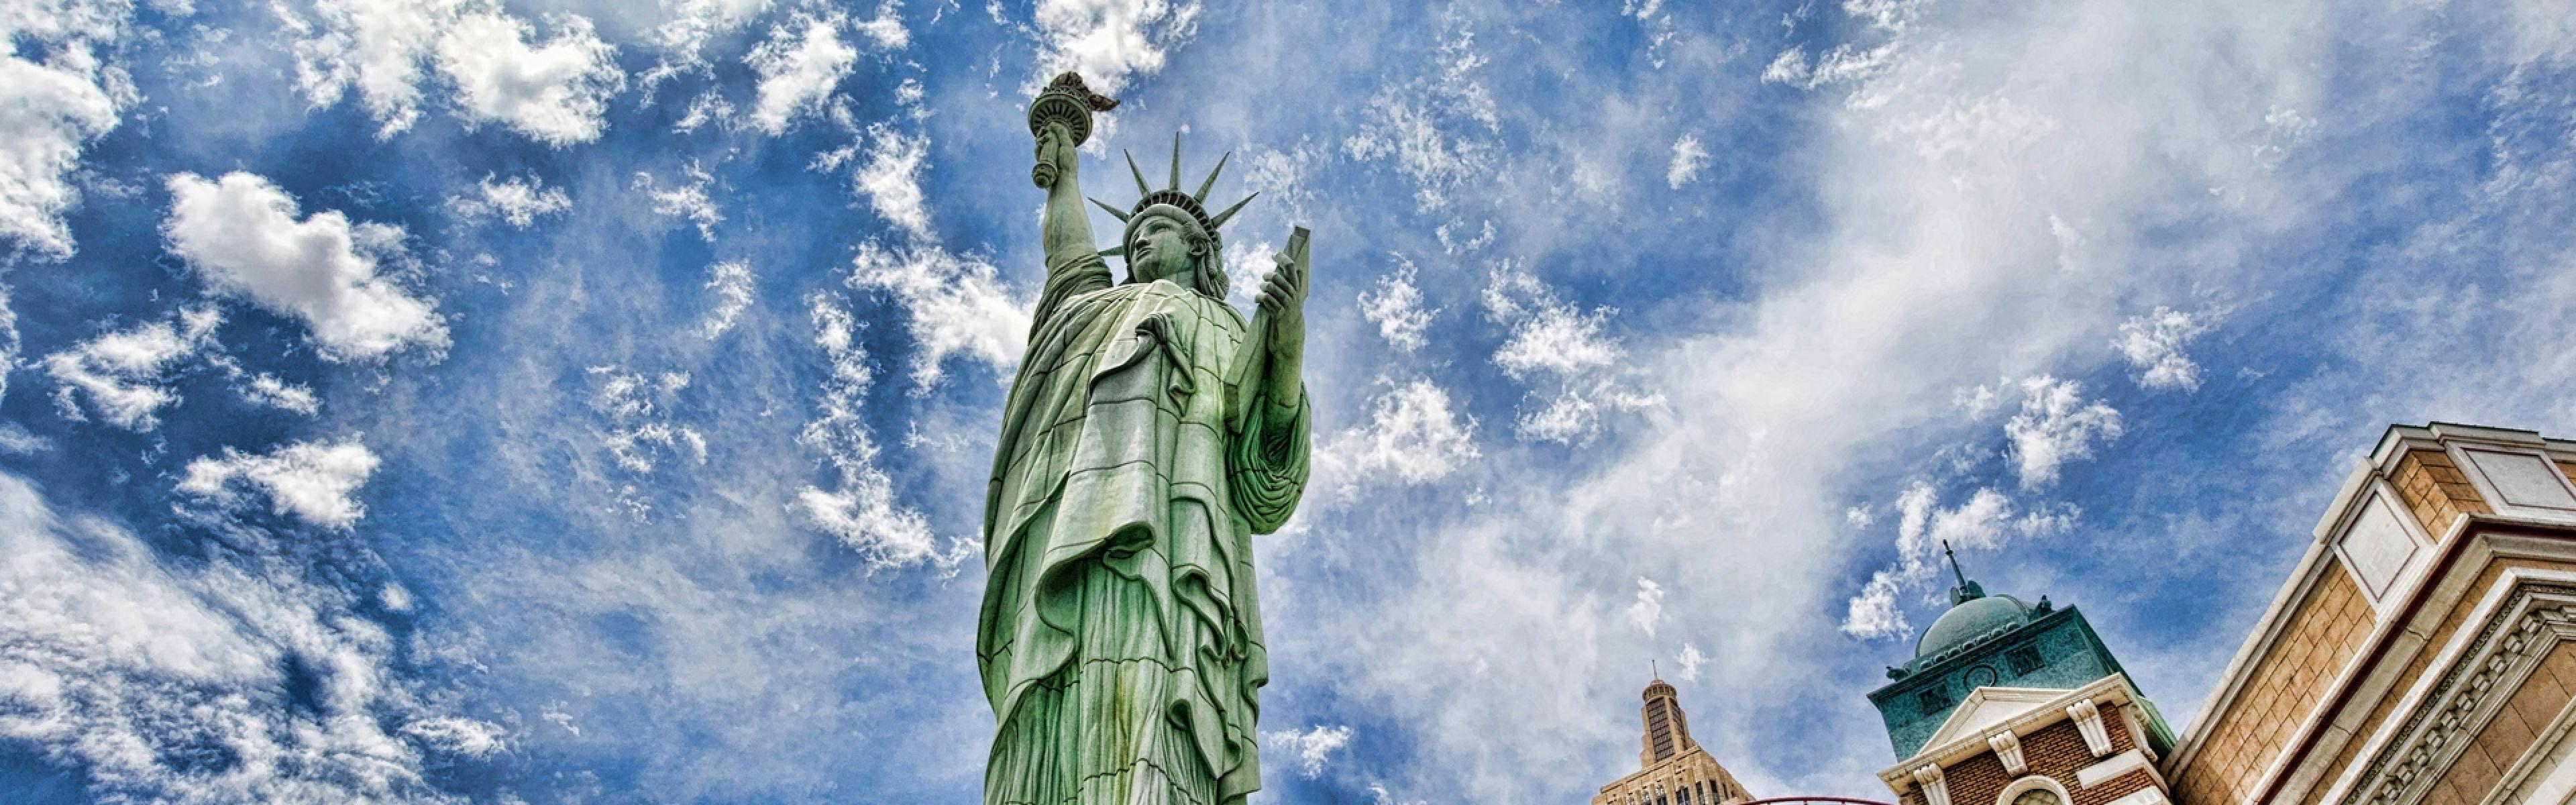 Download Wallpaper 3840x1200 New york, Statue of liberty, Liberty